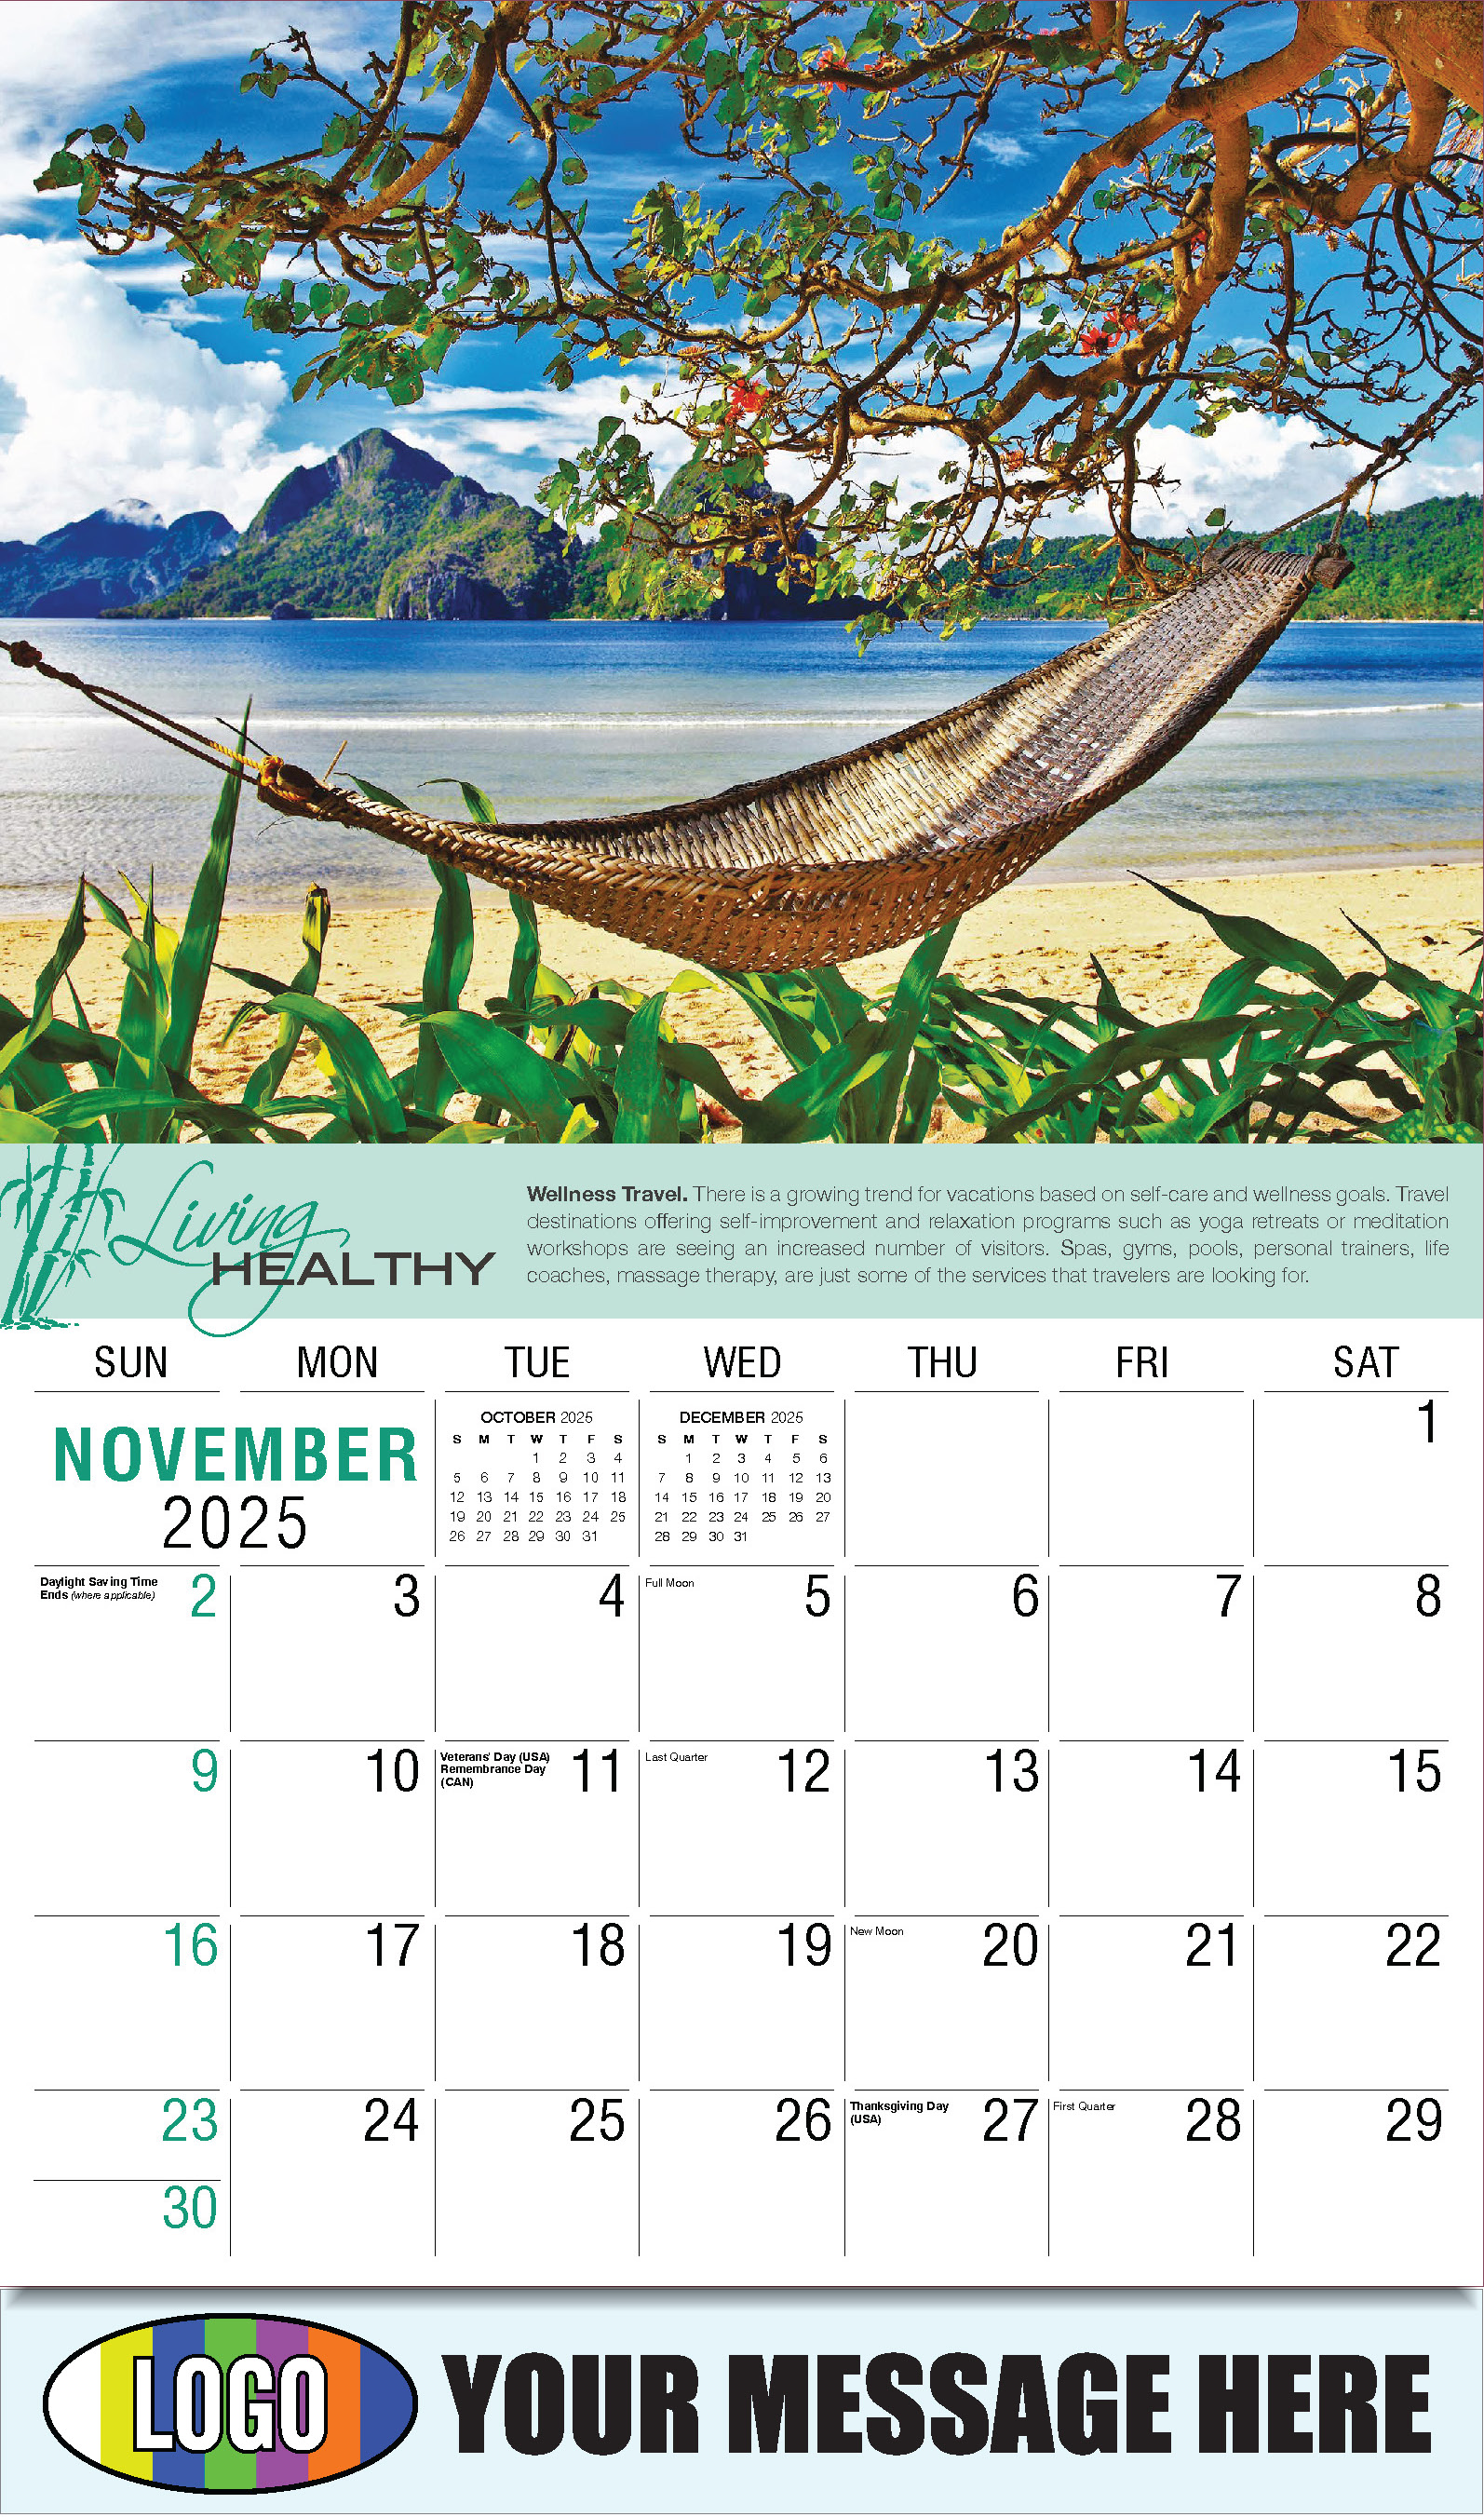 Living Healthy 2025 Business Promotional Calendar - November